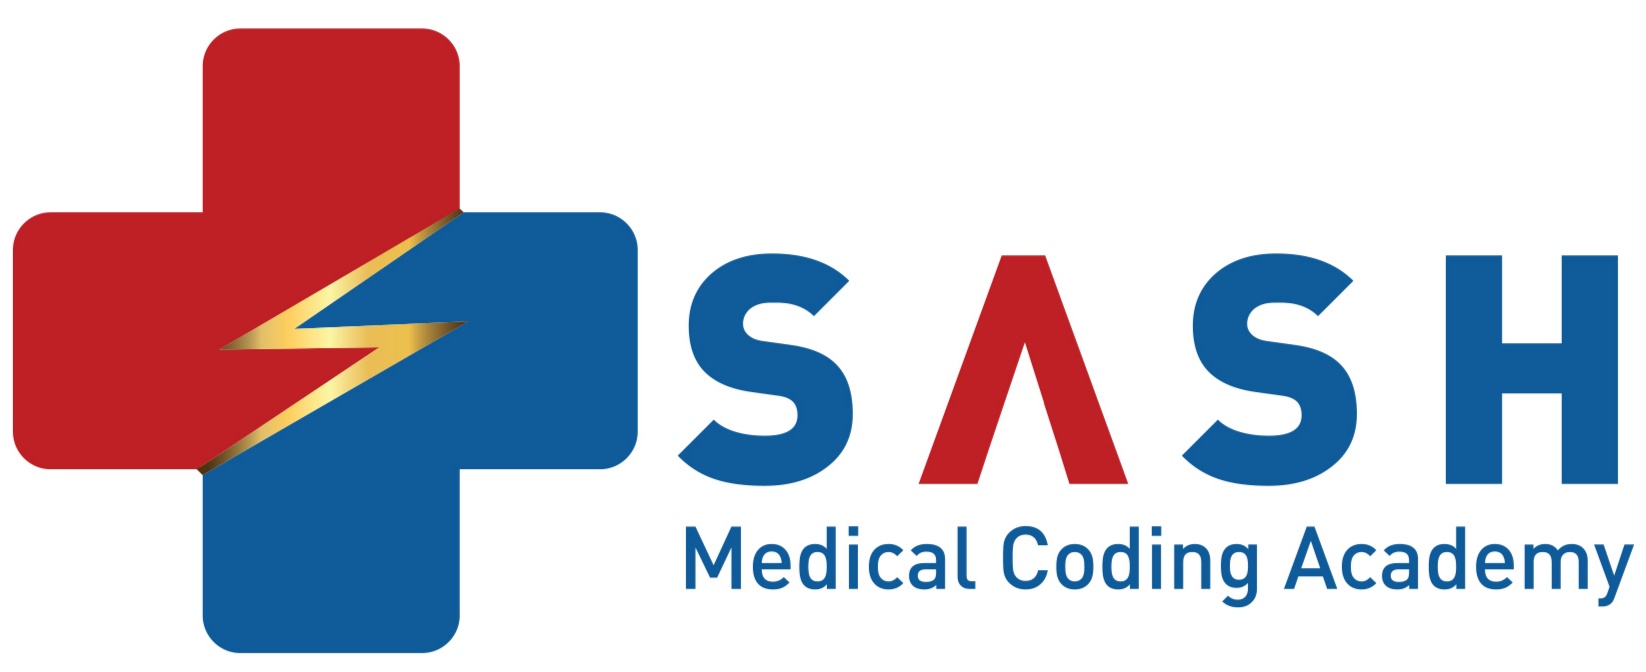 Medical Coding Academy Logo